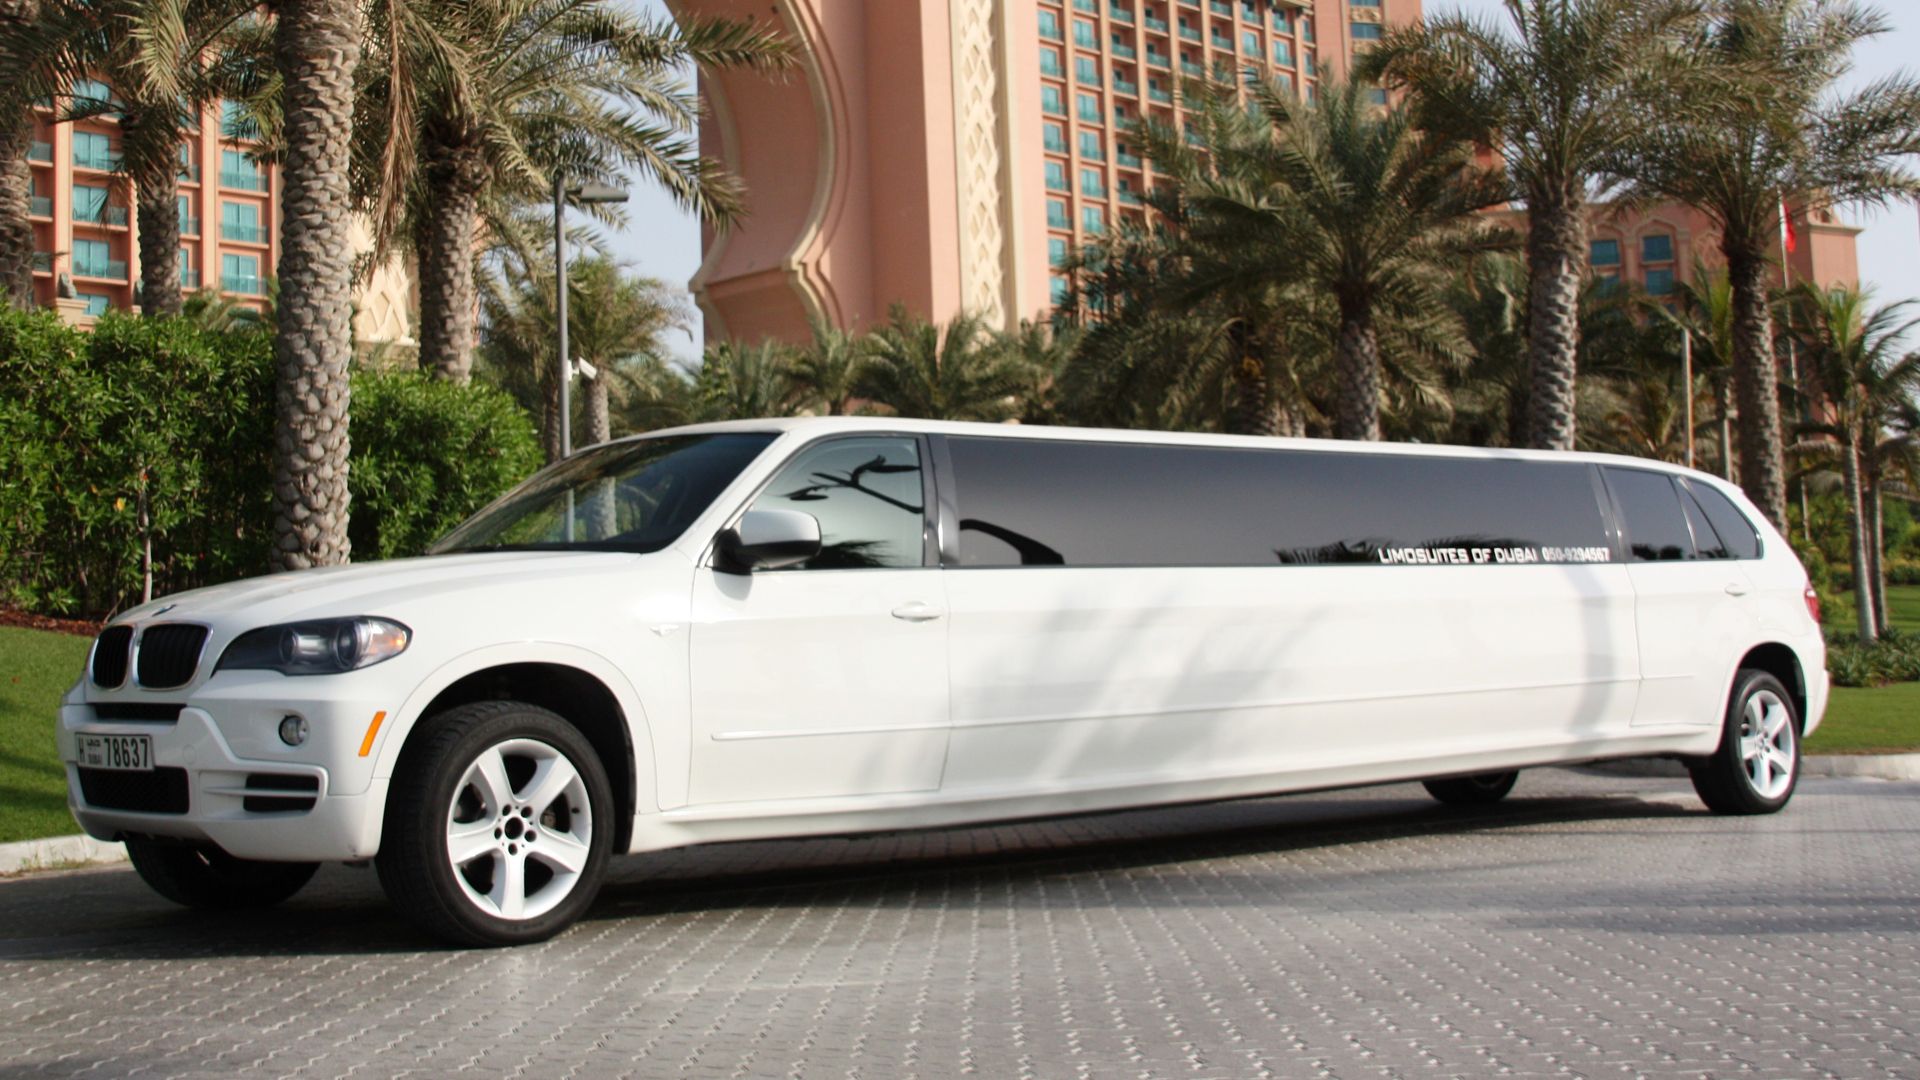 Dubai Limousine Services - Dubai Limo Service at Best Price